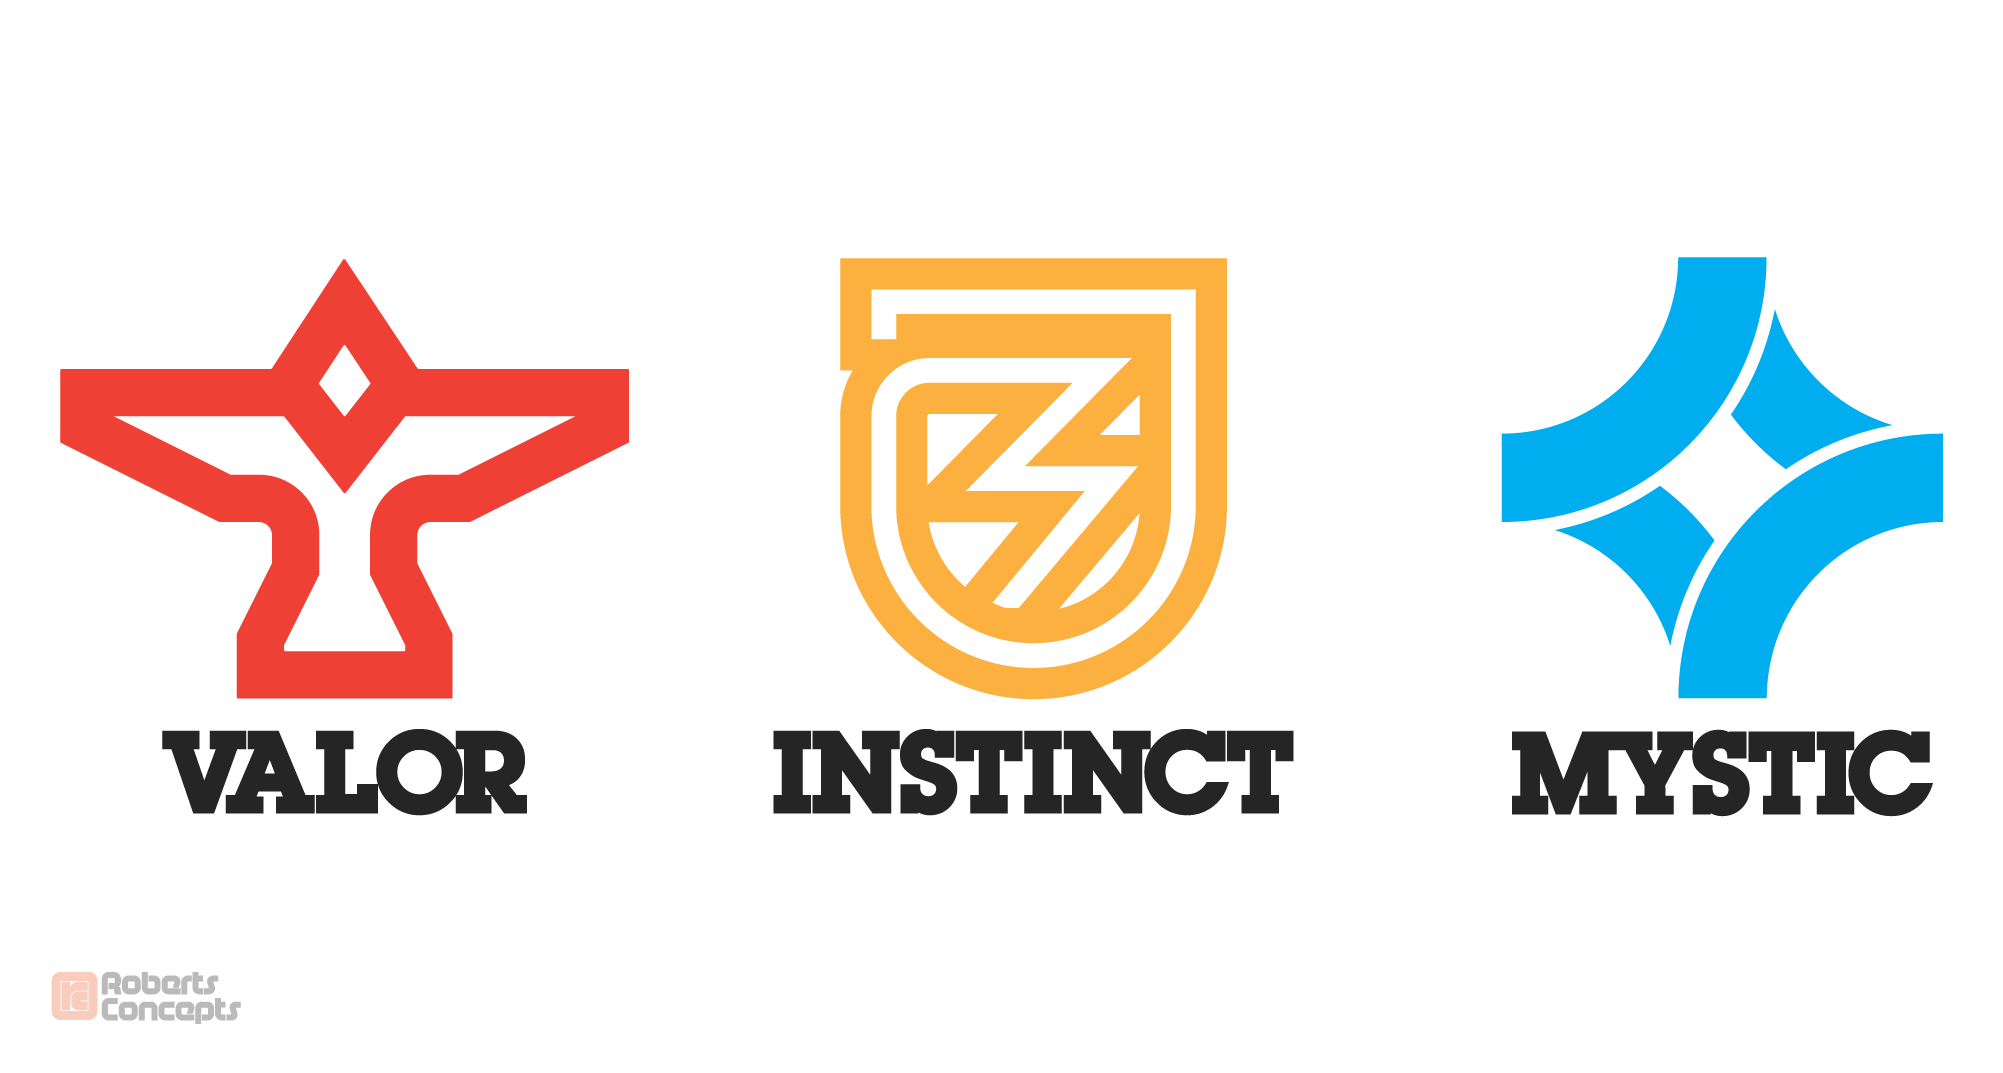 Can I Use Pokemon Go Logo - I'm a graphic designer who loves logos & pokemon. Here's some little